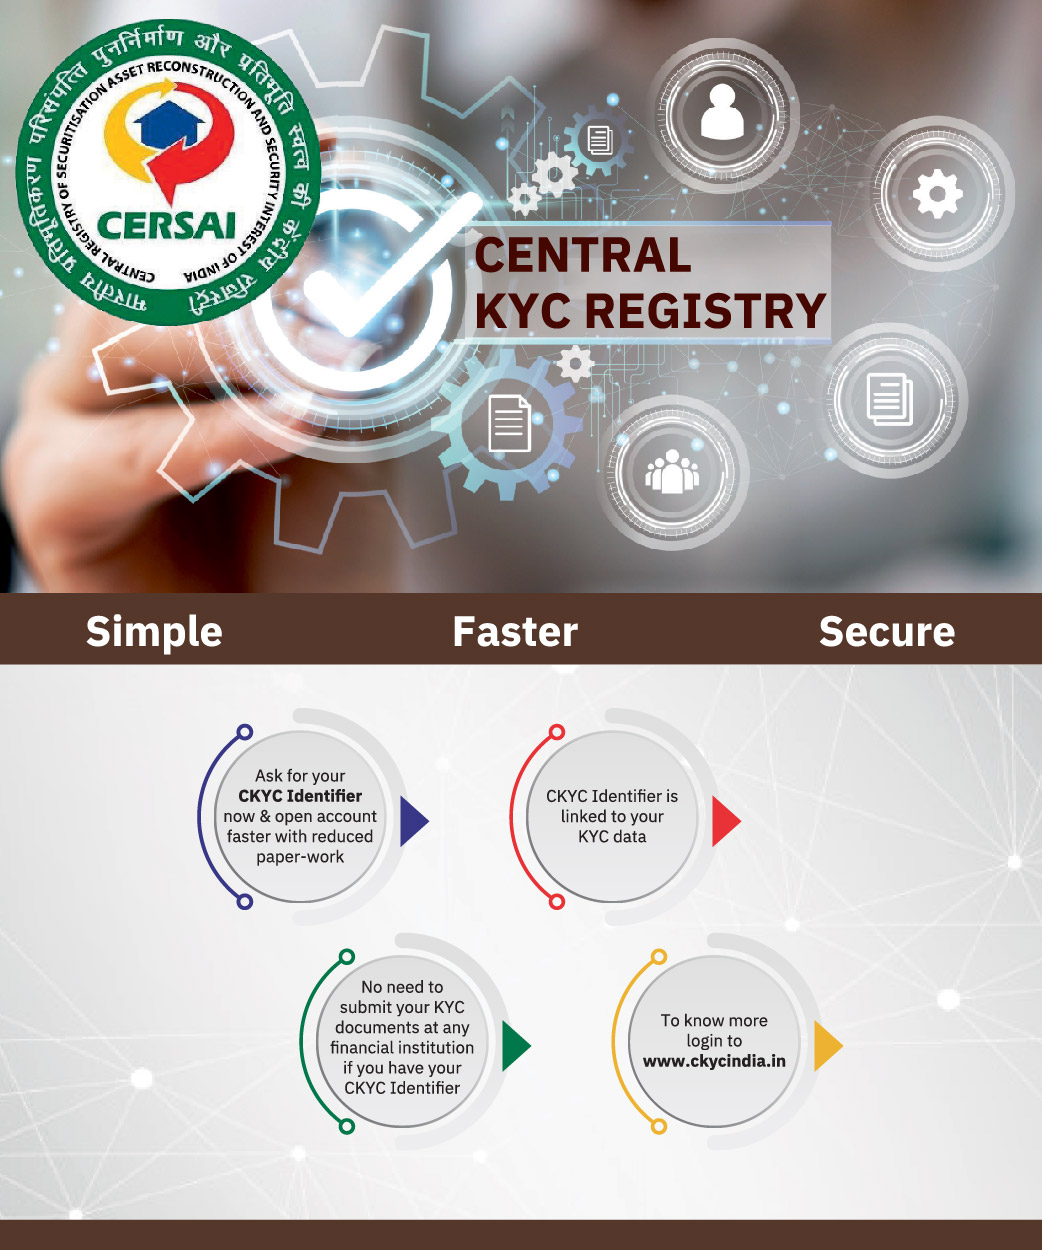 Central KYC Registry